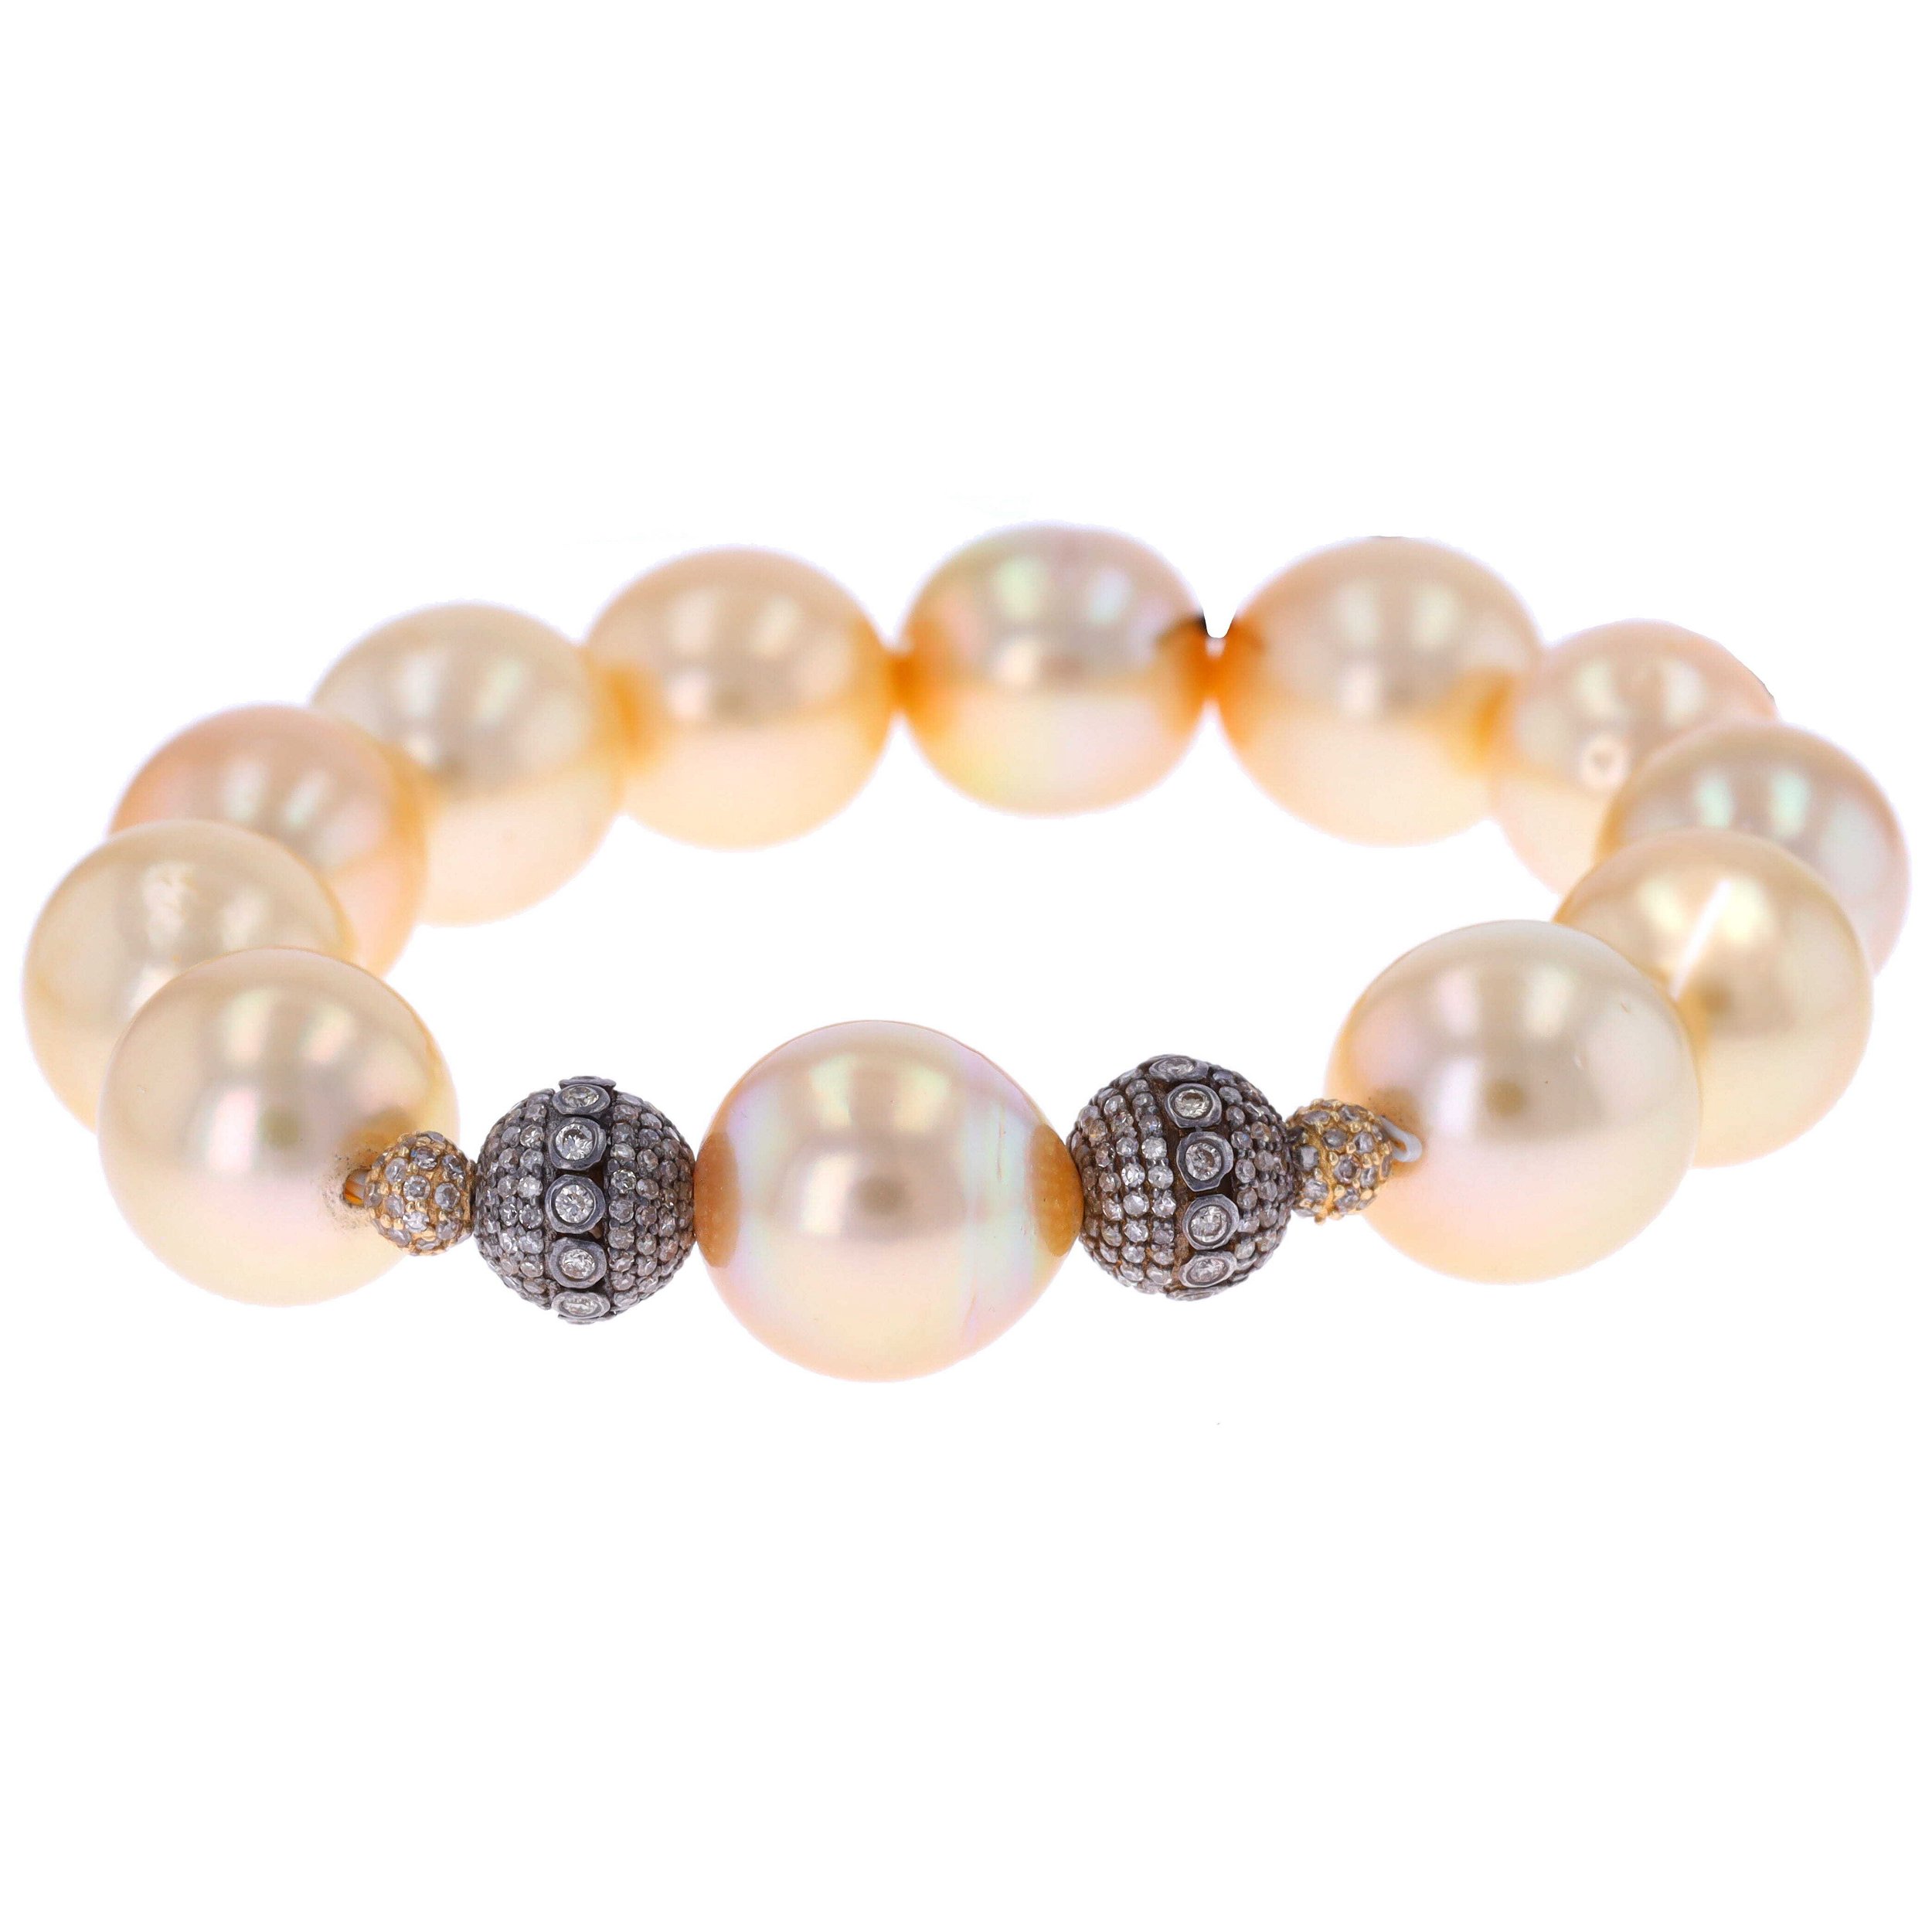 South Sea Golden Pearl Stretch Bracelet With 14k Diamond Charms